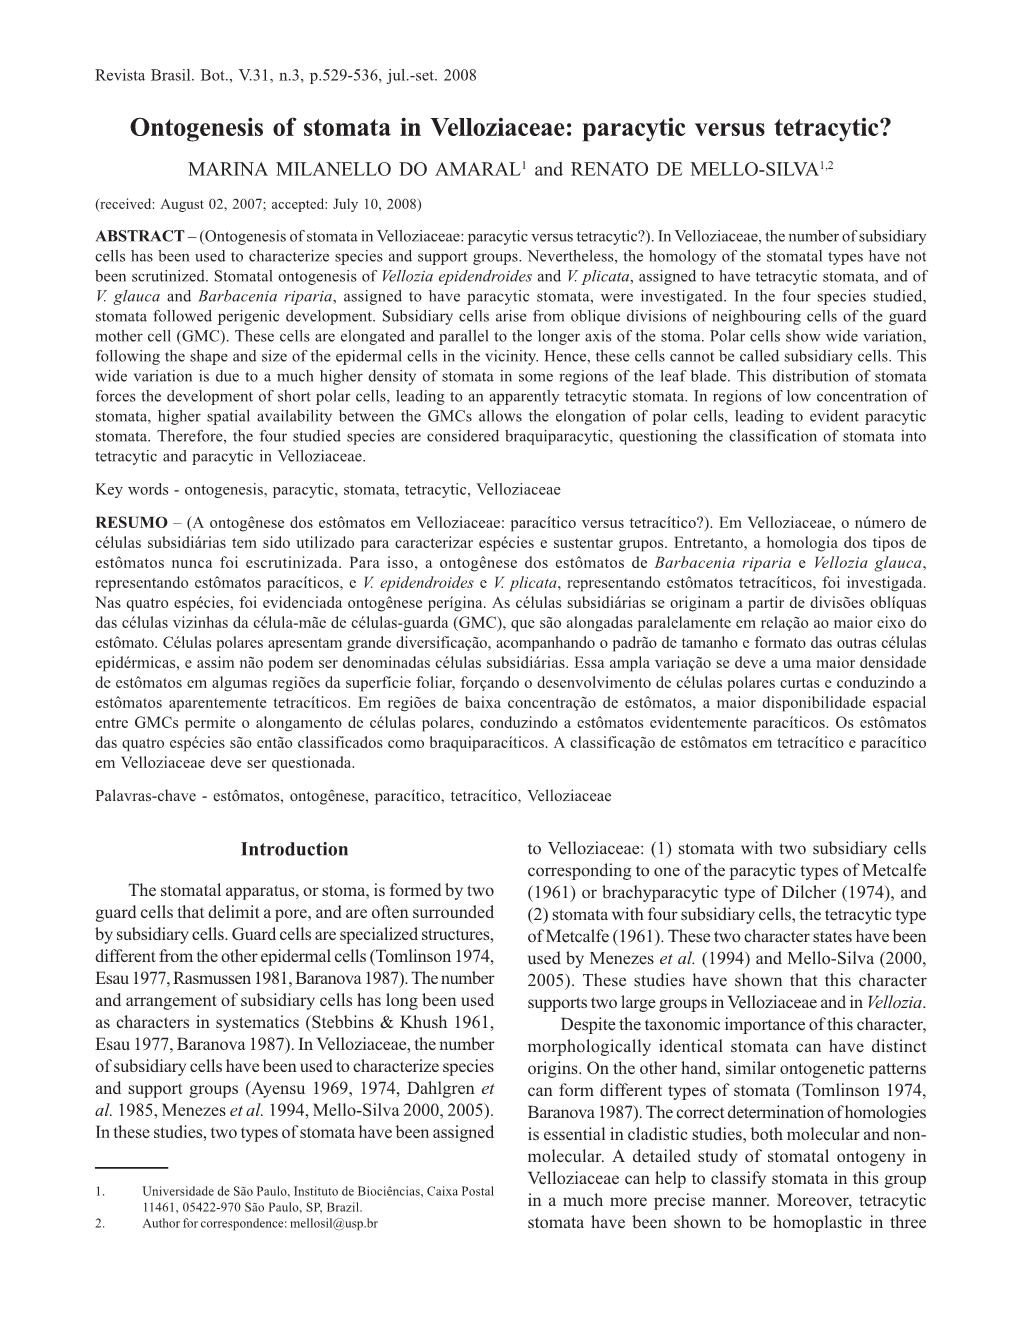 Ontogenesis of Stomata in Velloziaceae: Paracytic Versus Tetracytic? MARINA MILANELLO DO AMARAL1 and RENATO DE MELLO-SILVA1,2